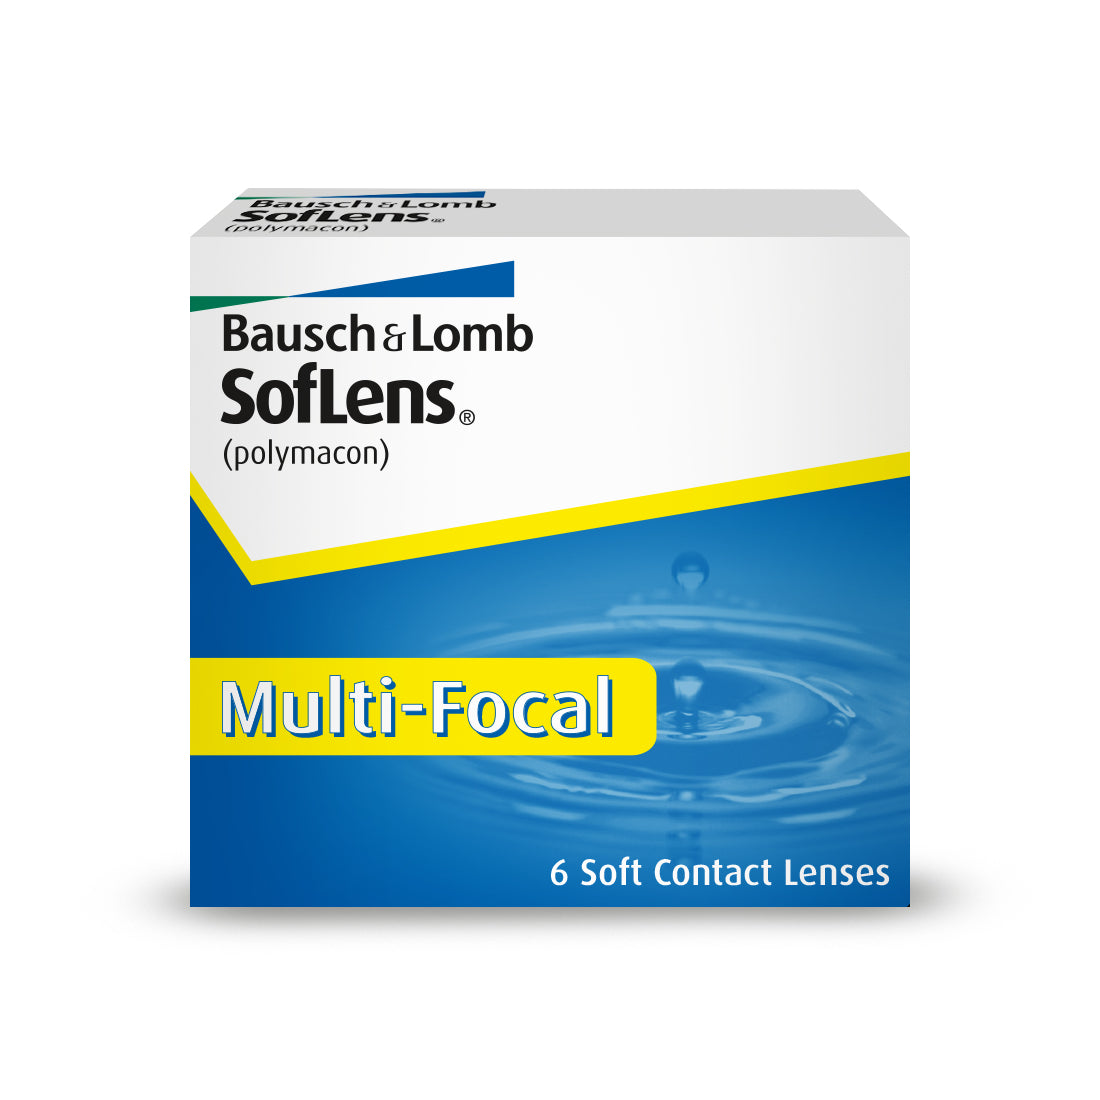 Bausch + Lomb SofLens® Multi-Focal